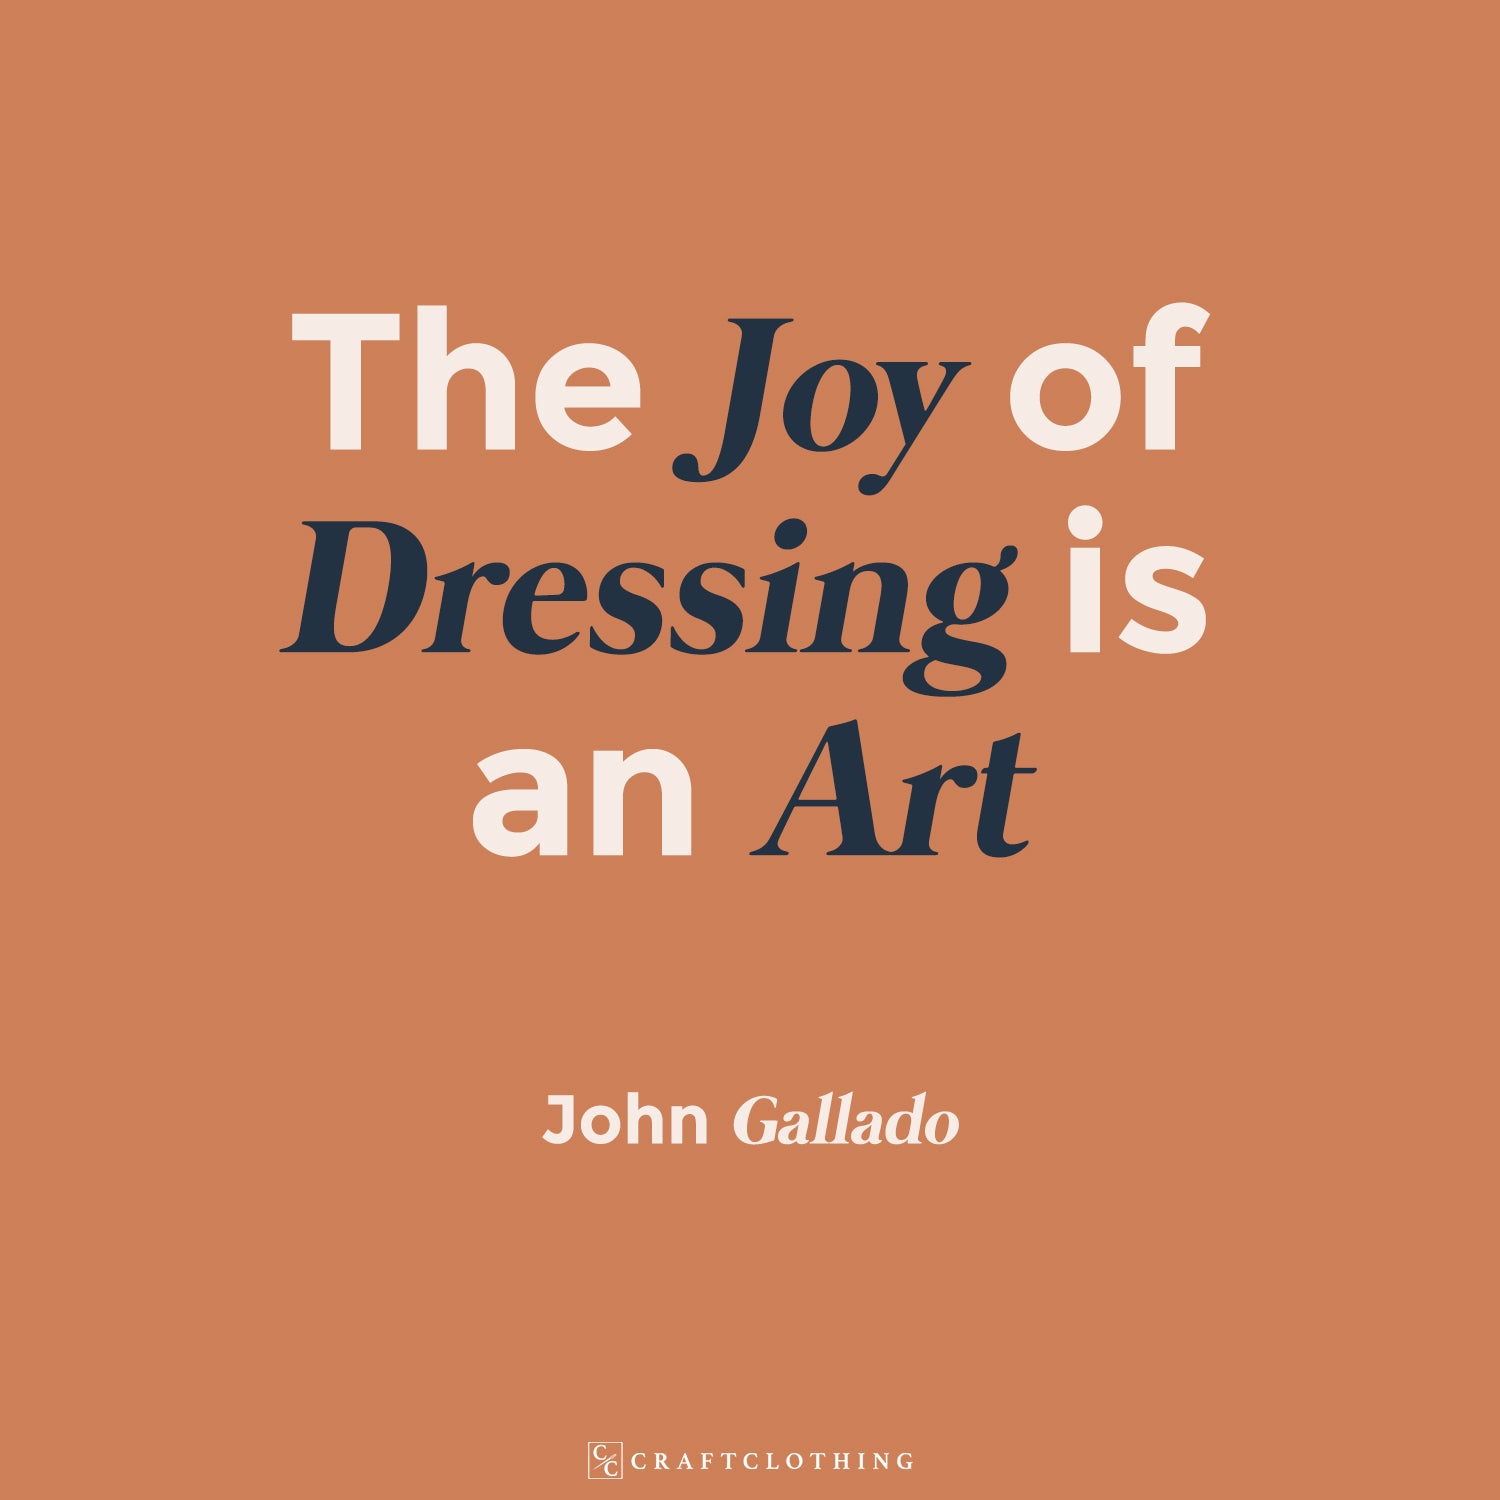 The Joy of Dressing is an Art